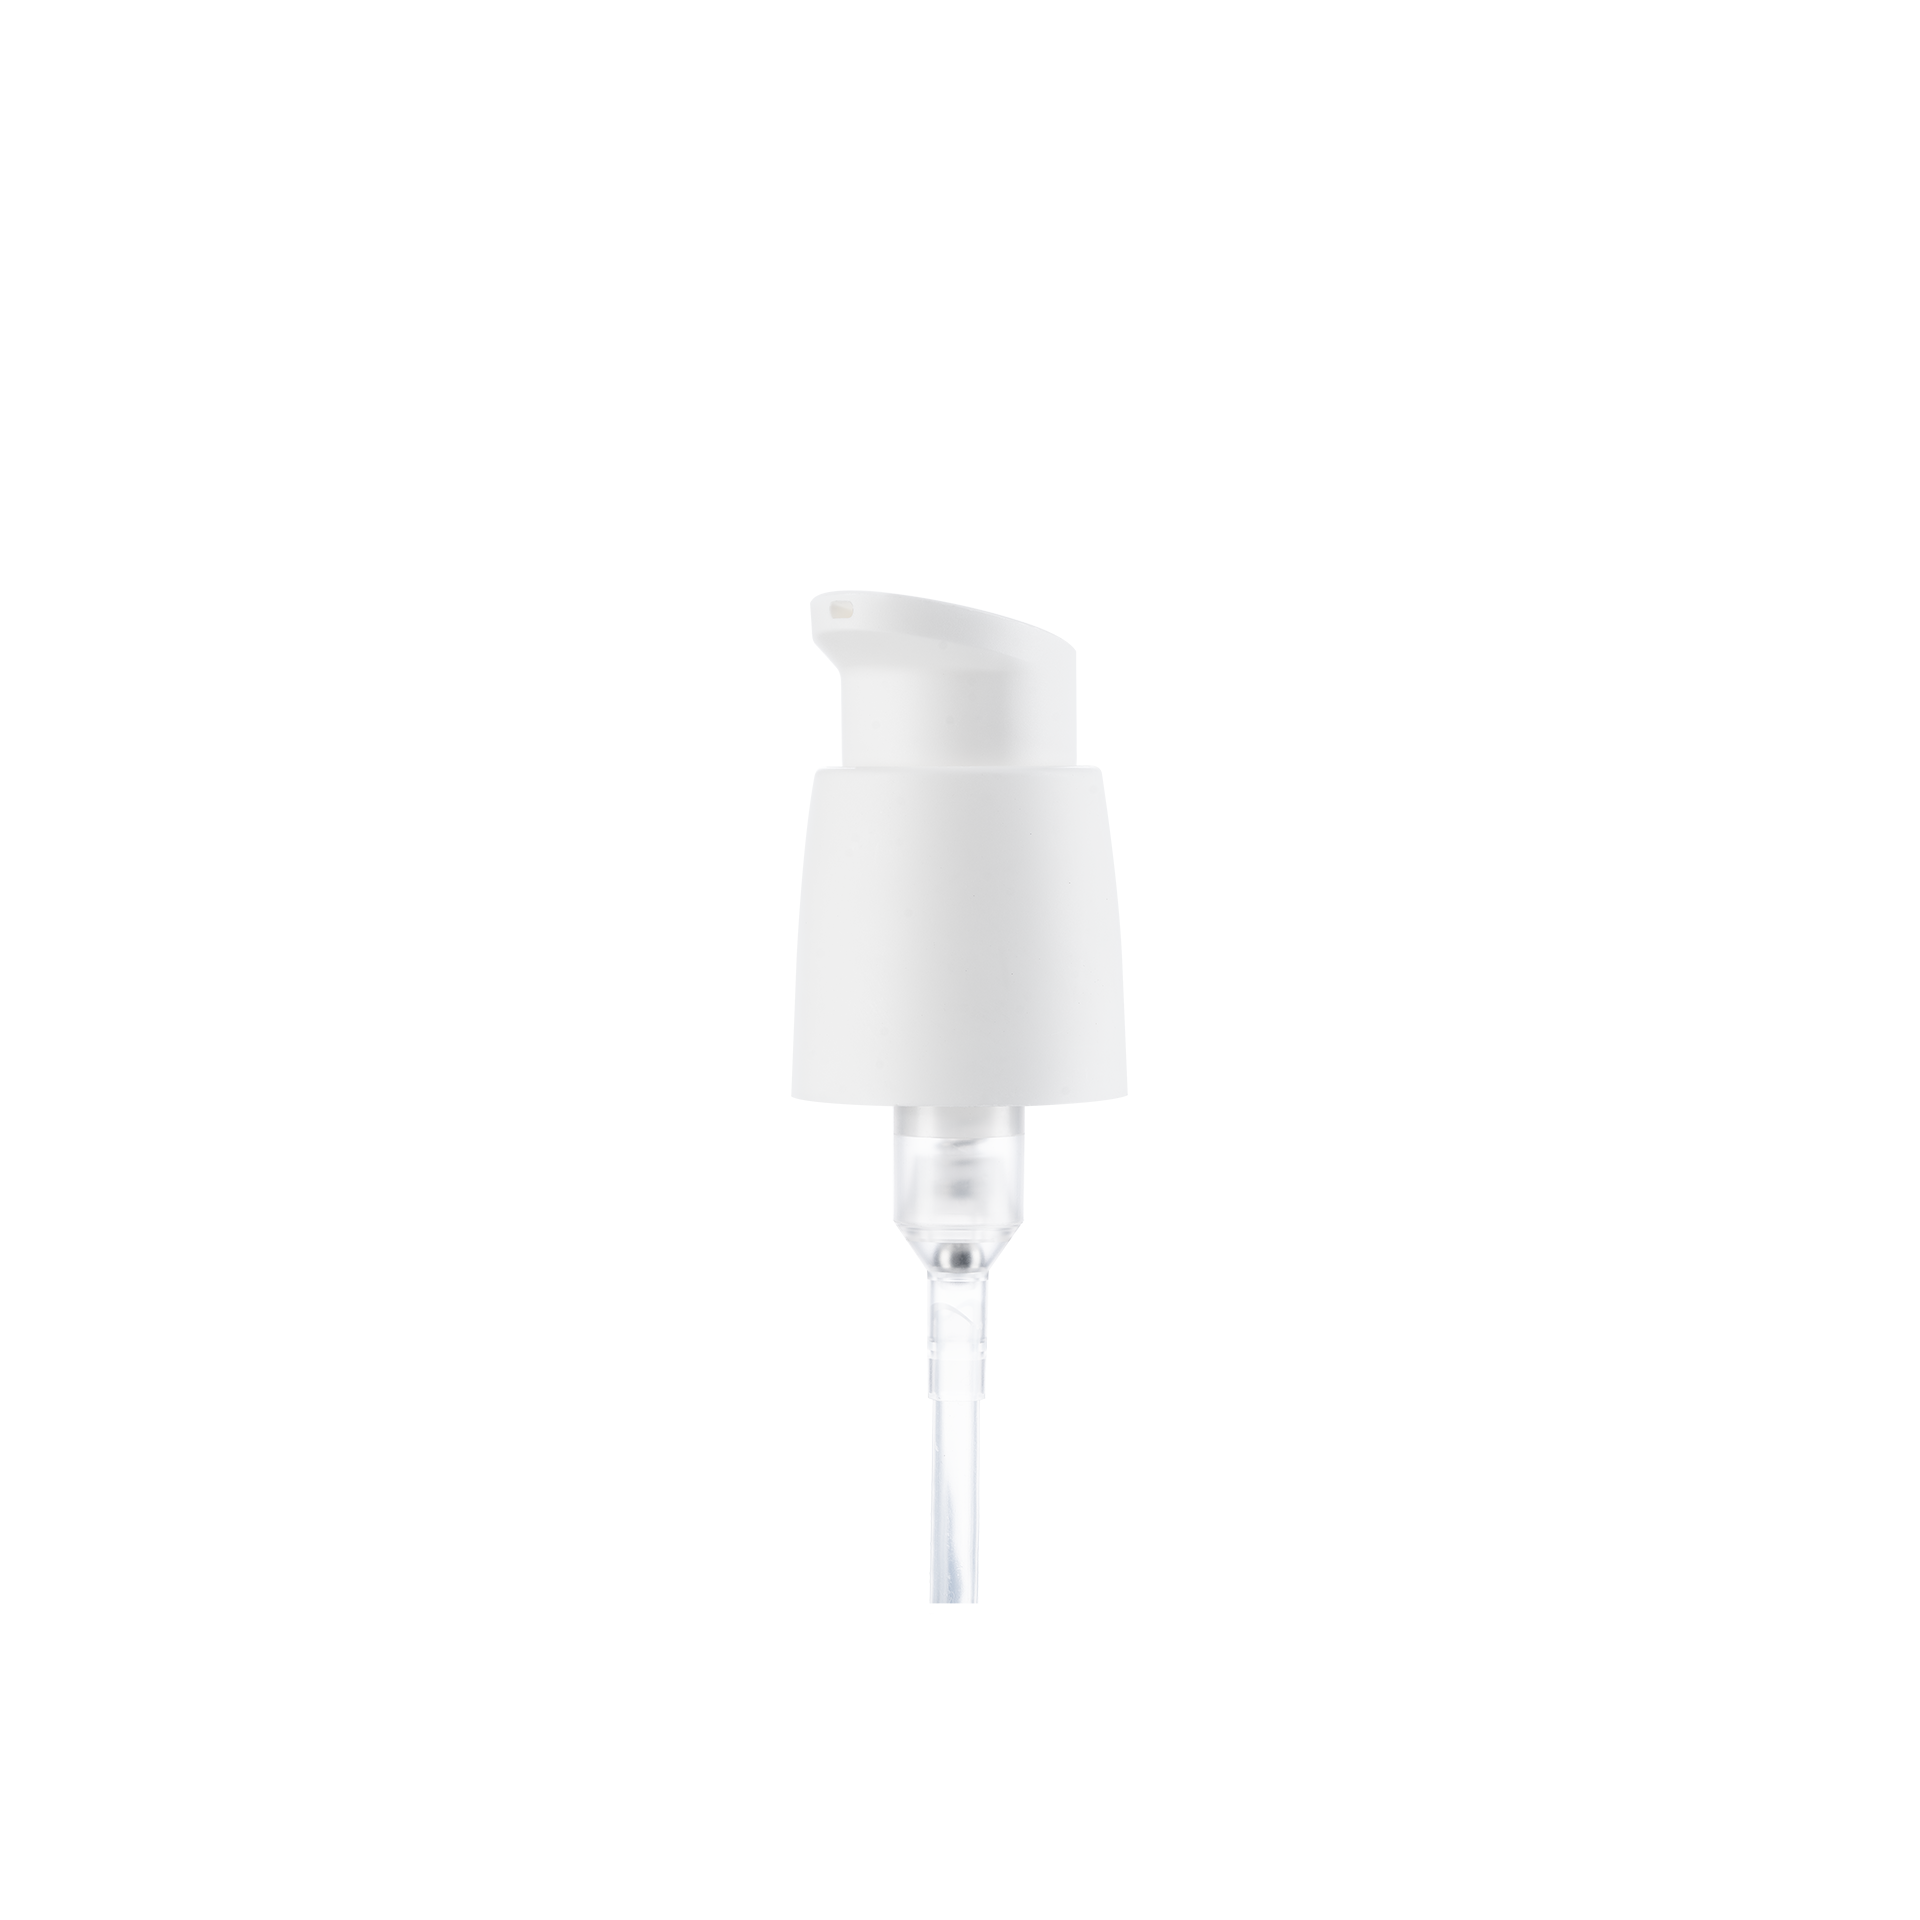 Lotion pump Cremosa 24/410, PP, white, matte finish, dose 0.28ml, twist-lock (Willow 100)